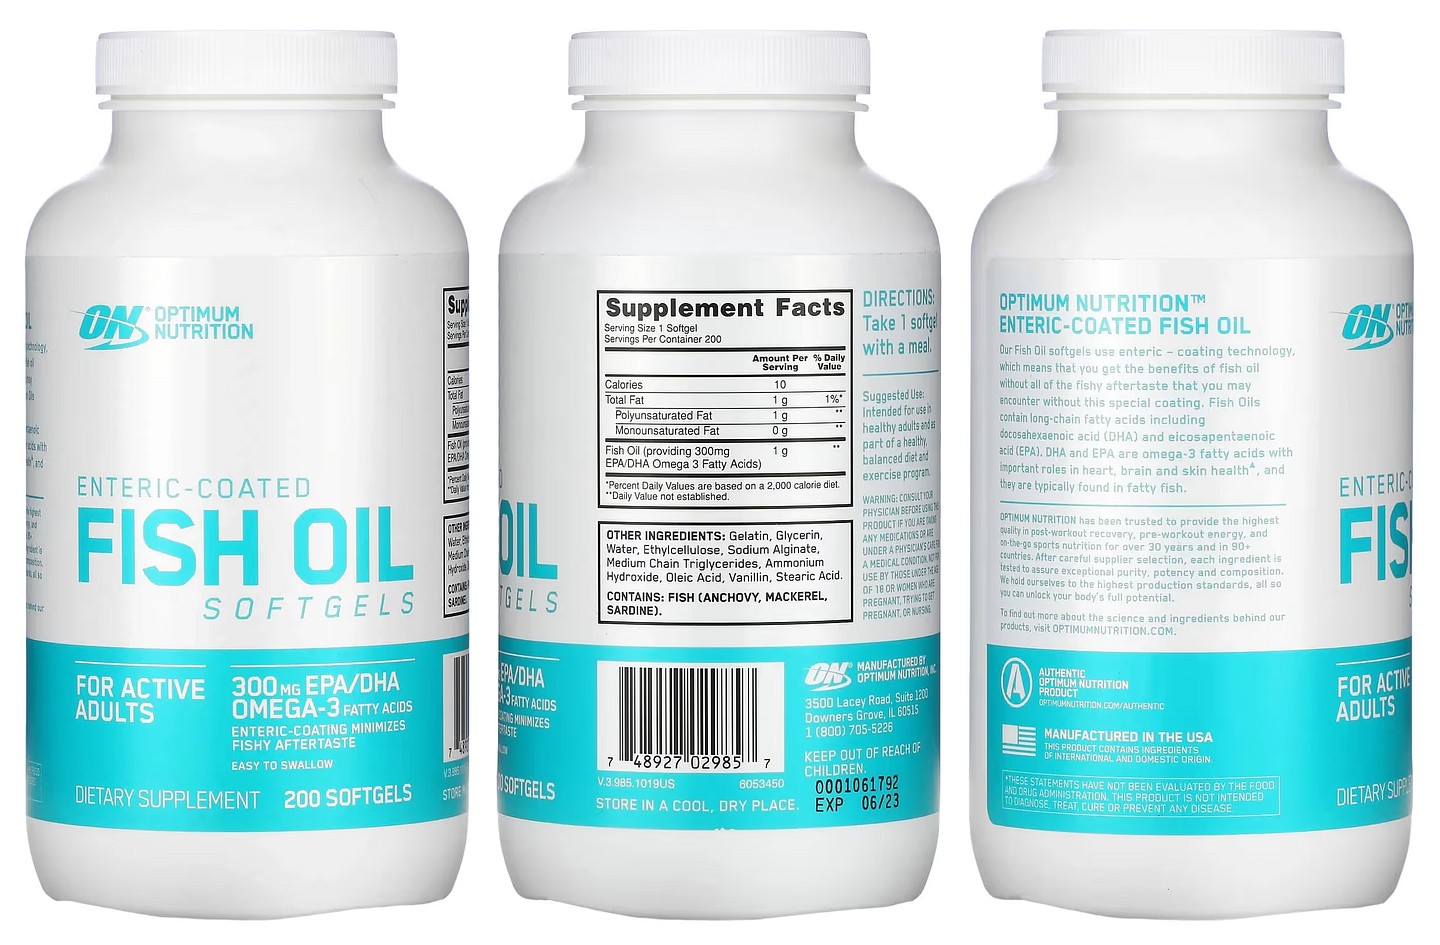 Optimum Nutrition, Enteric-Coated Fish Oil packaging